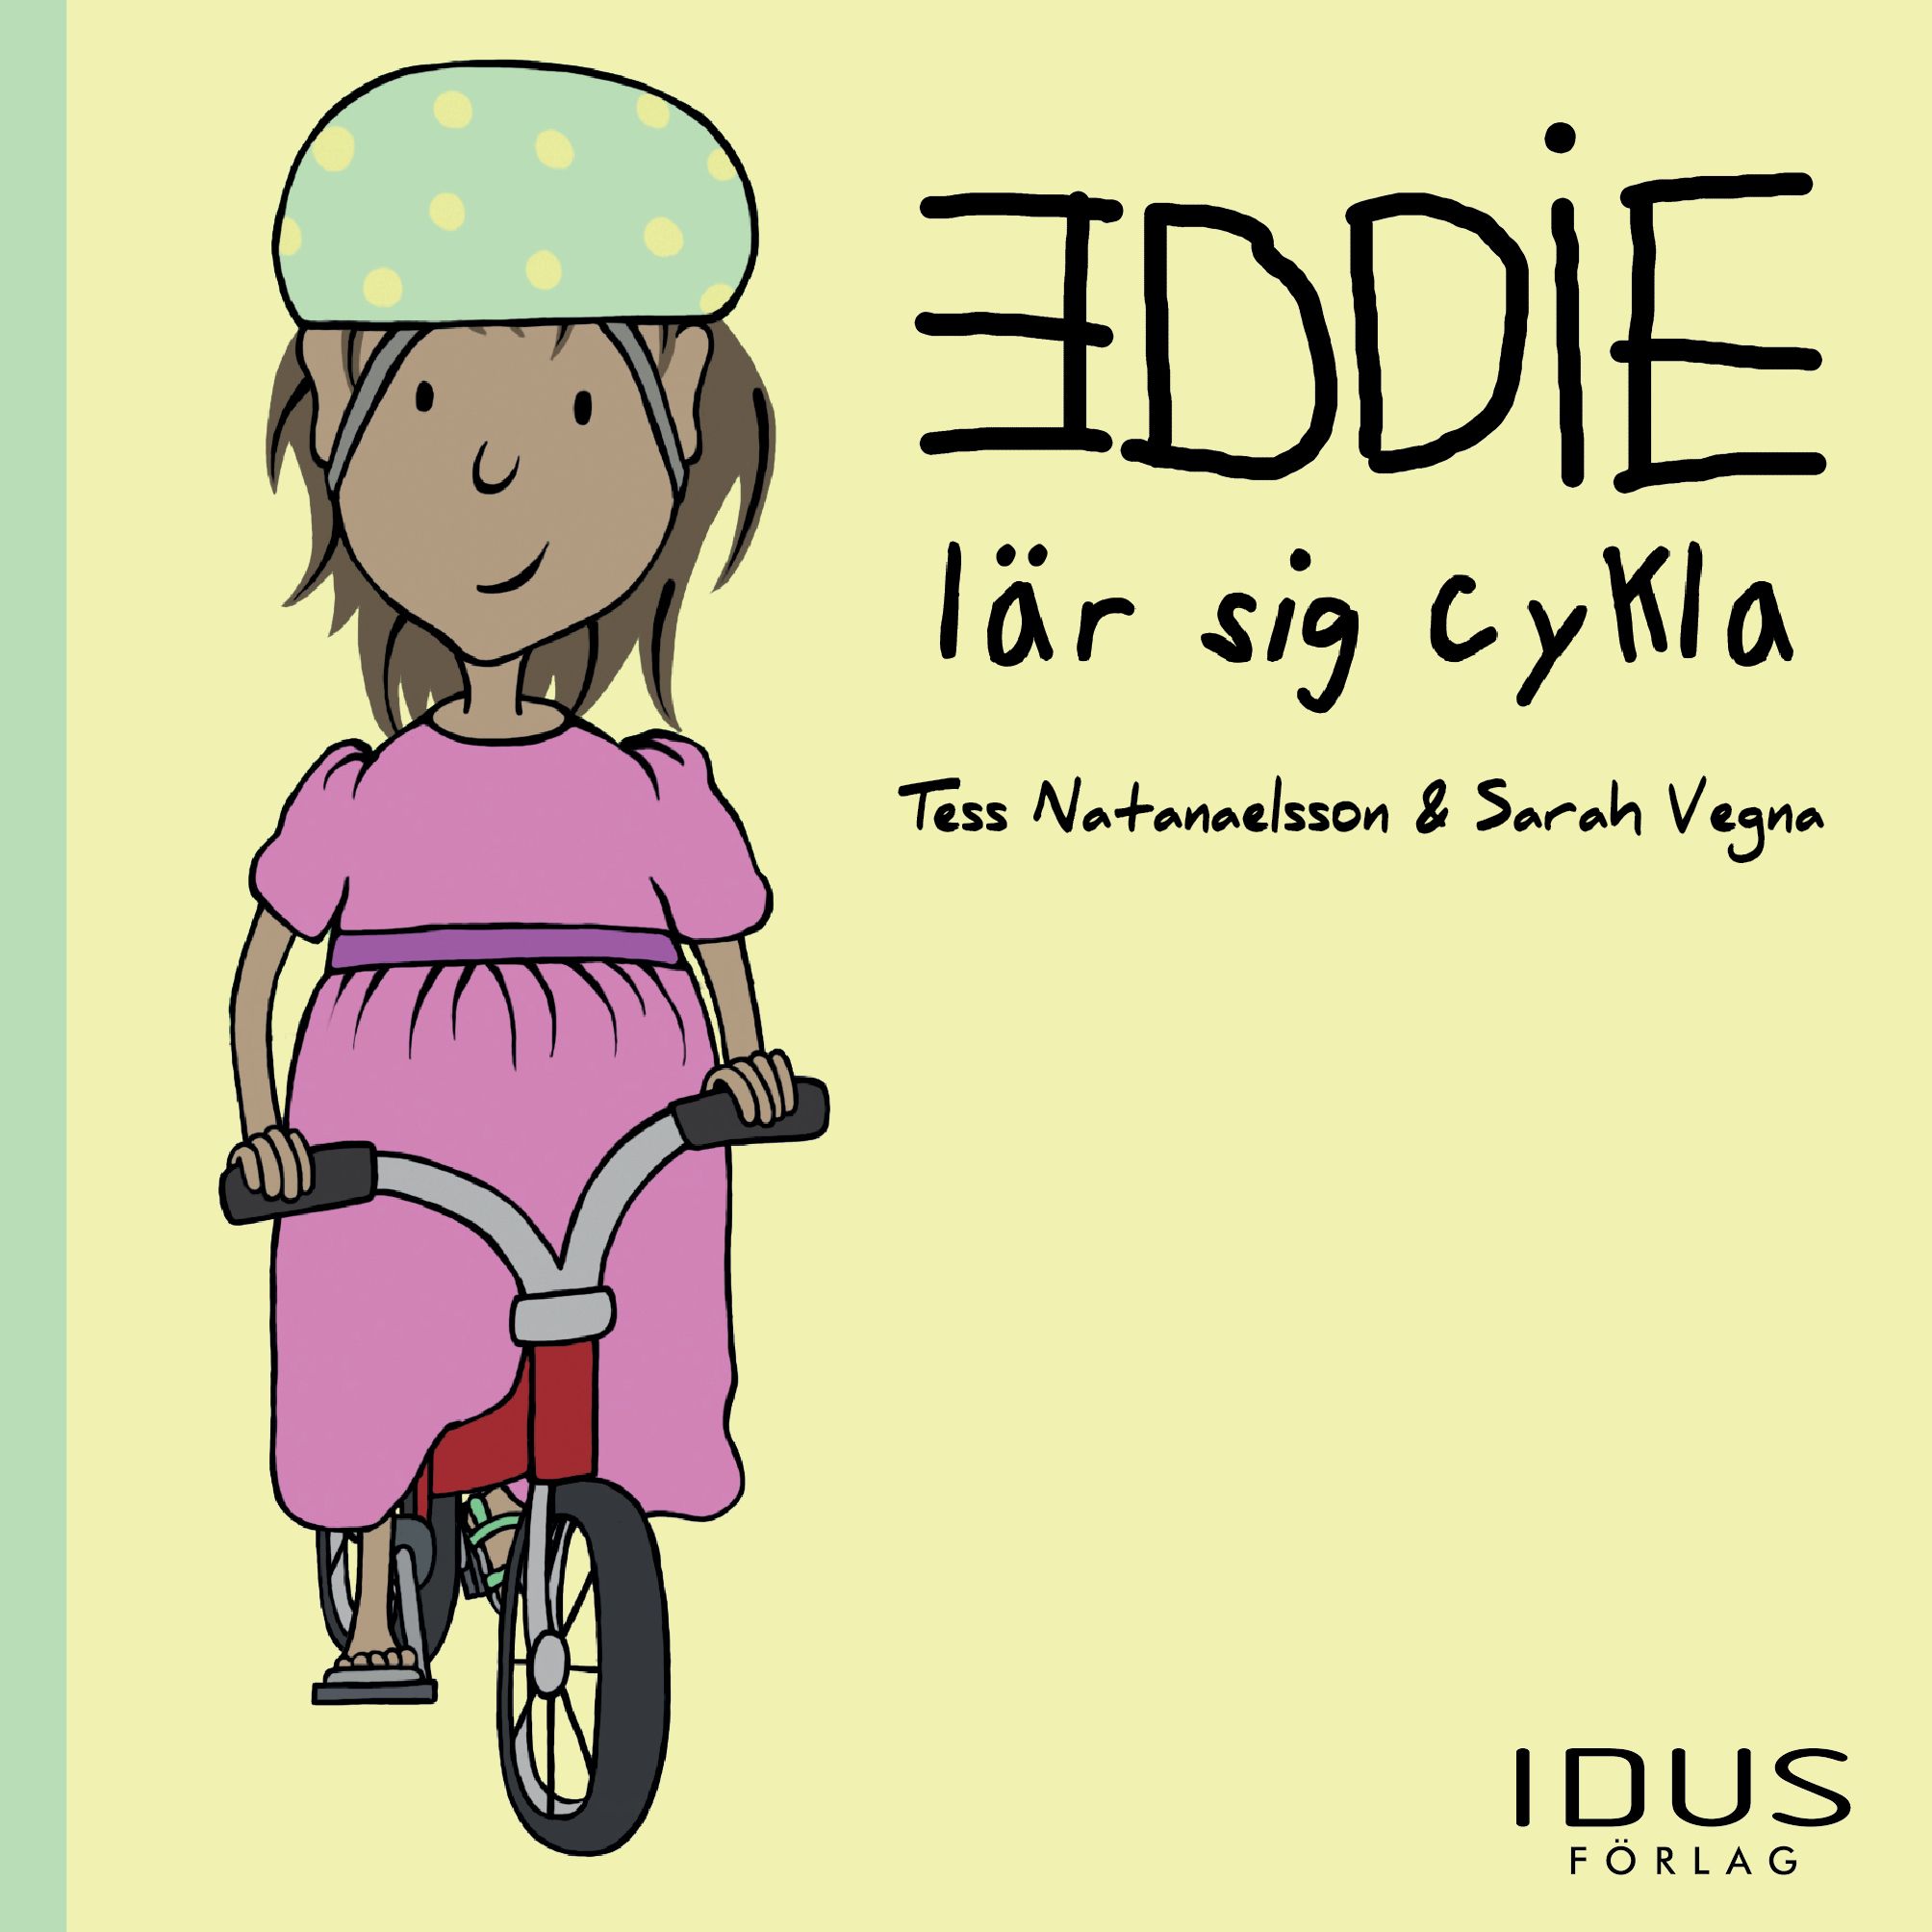 Eddie lär sig cykla, e-bok av Tess Natanaelsson, Sarah Vegna